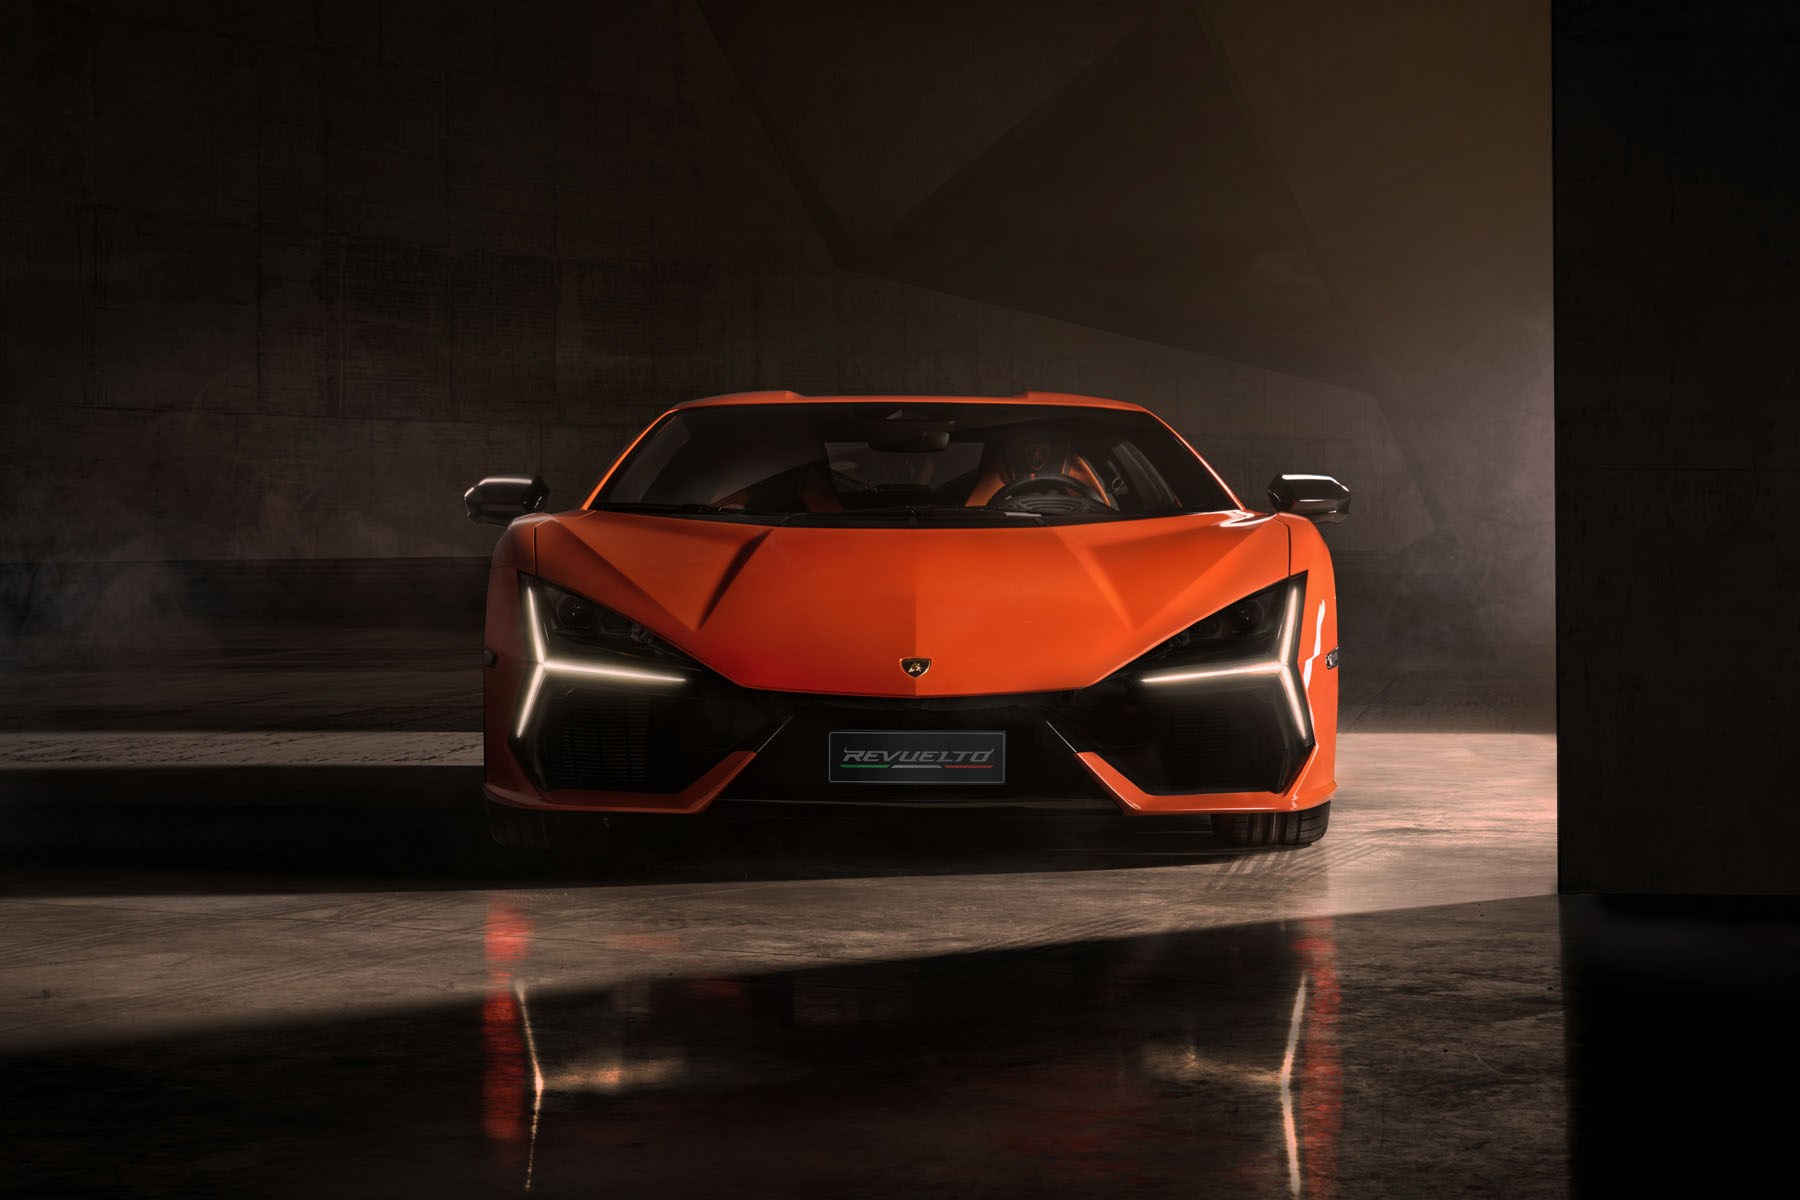 Lamborghini reveals the last V12-powered cars it will build before